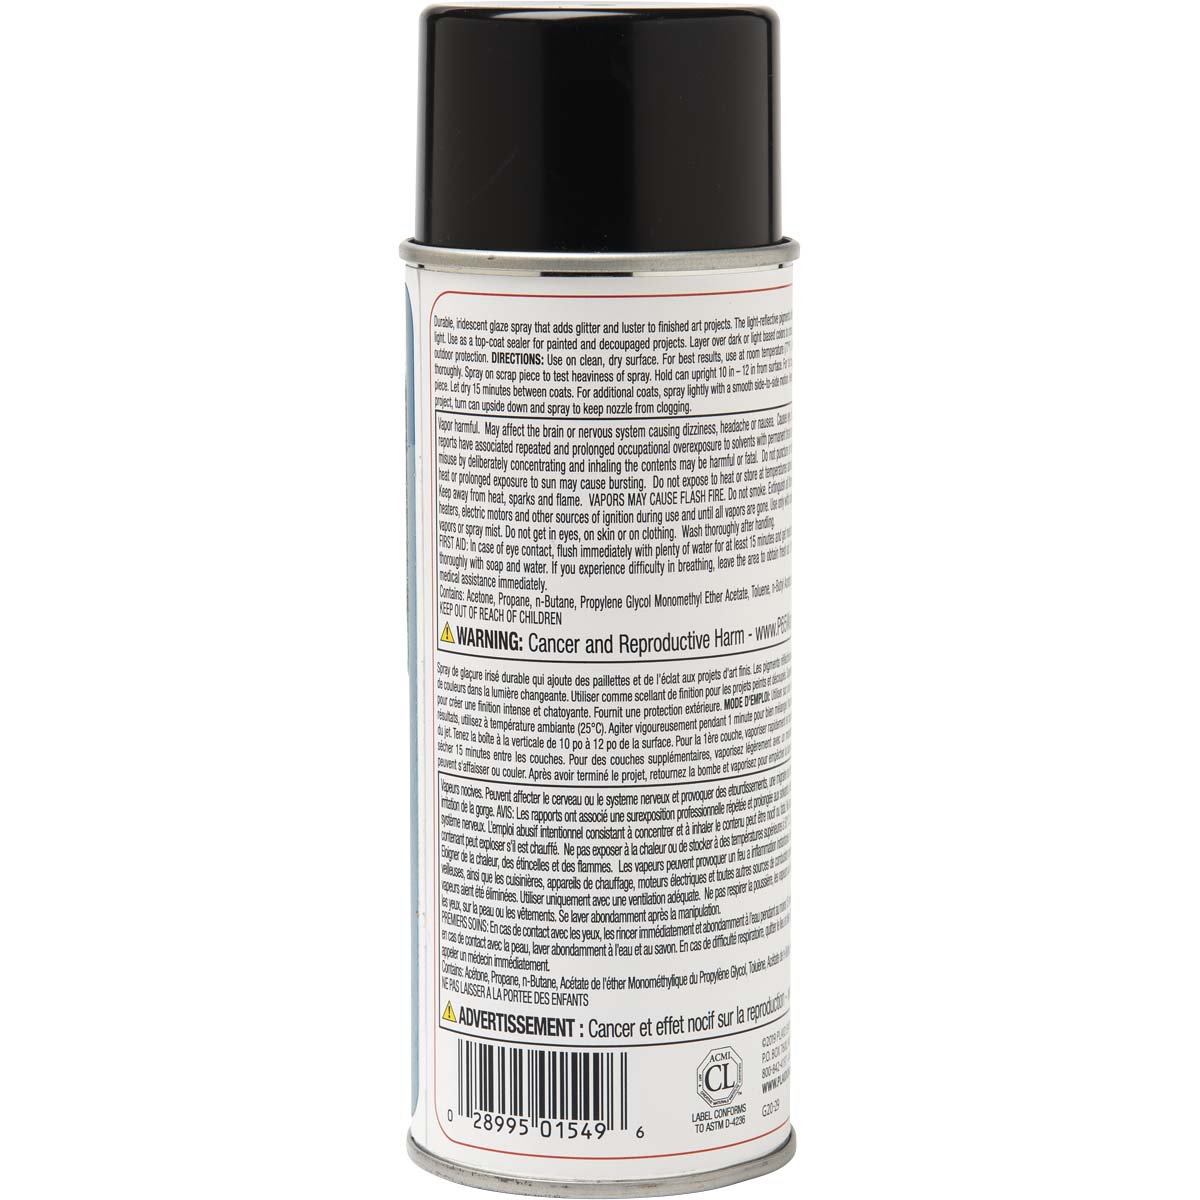 Shop Plaid Mod Podge ® Iridescent Acrylic Sealer - Iridescent, 8